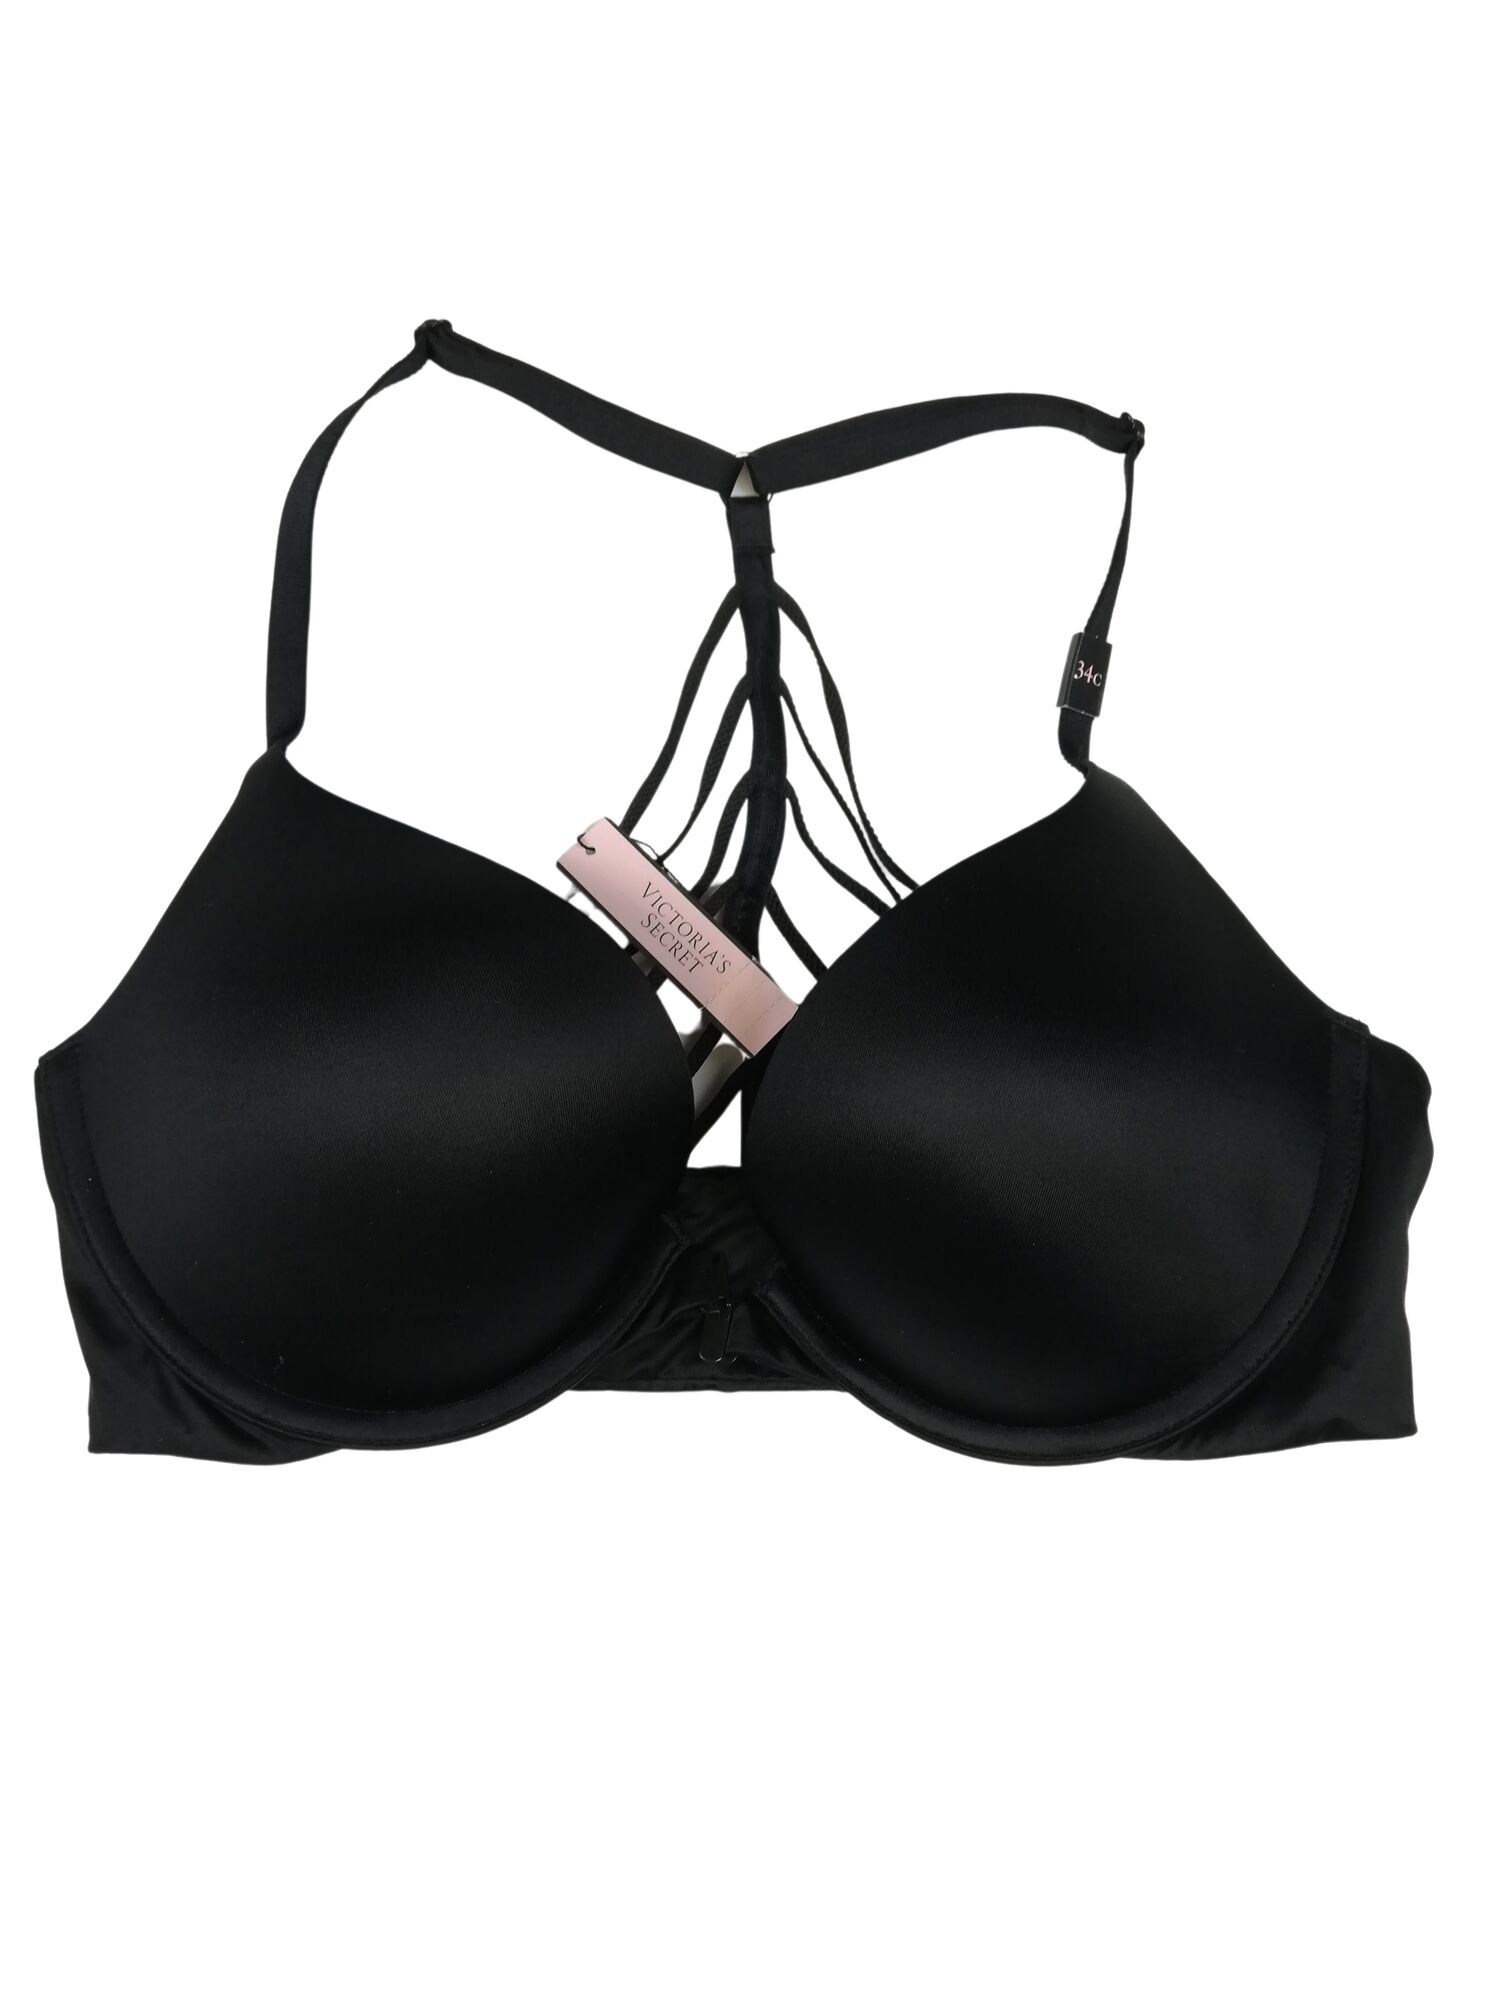 Push up bra Victoria's Secret - M, buy pre-owned at 25 EUR